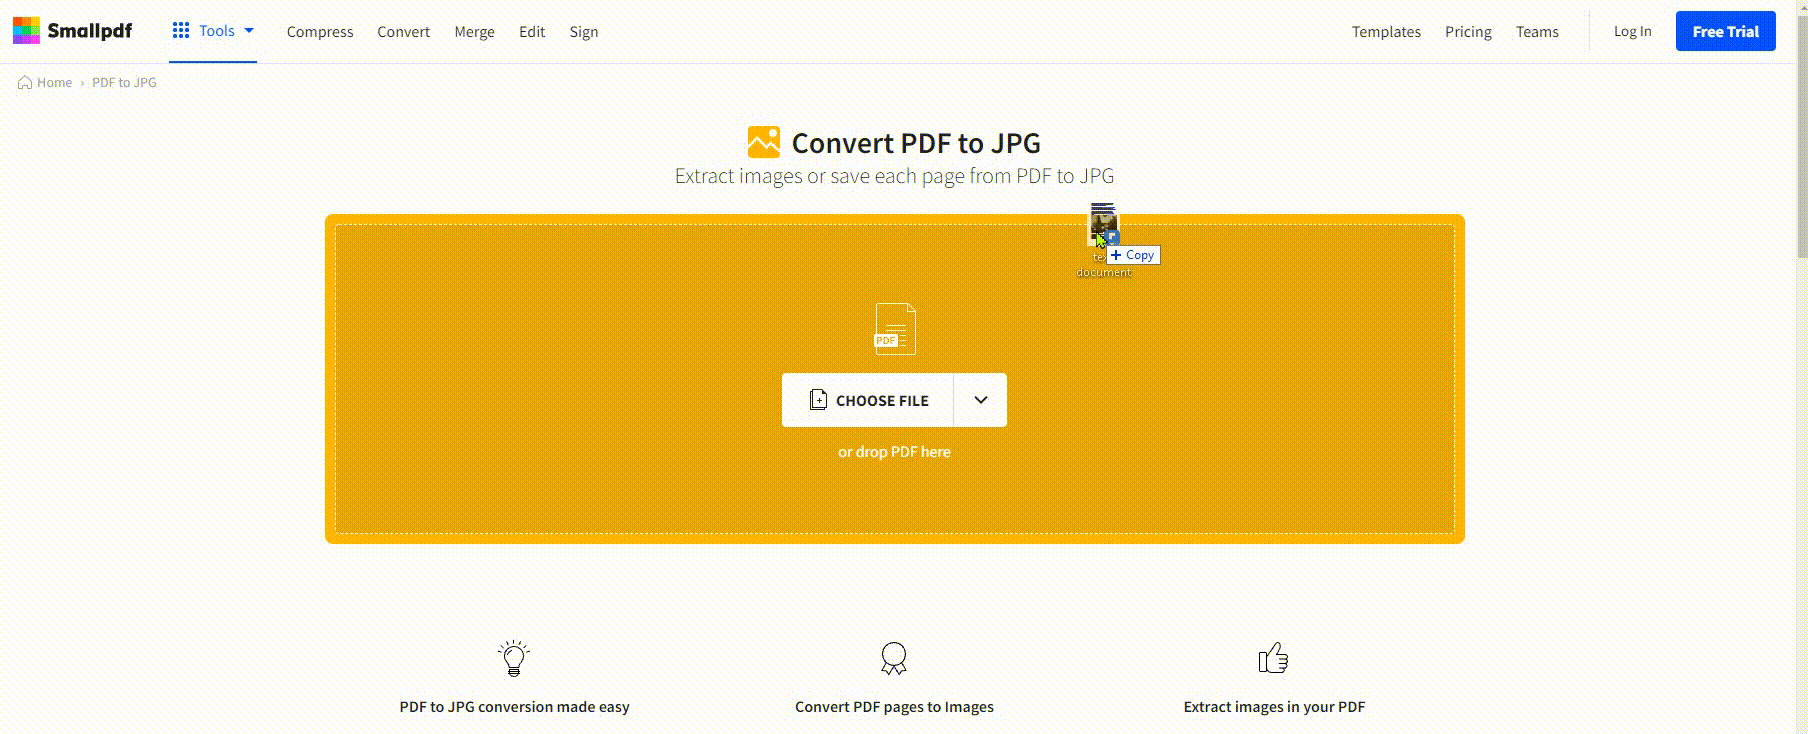 convert pdf to jpg windows 10 with smallpdf